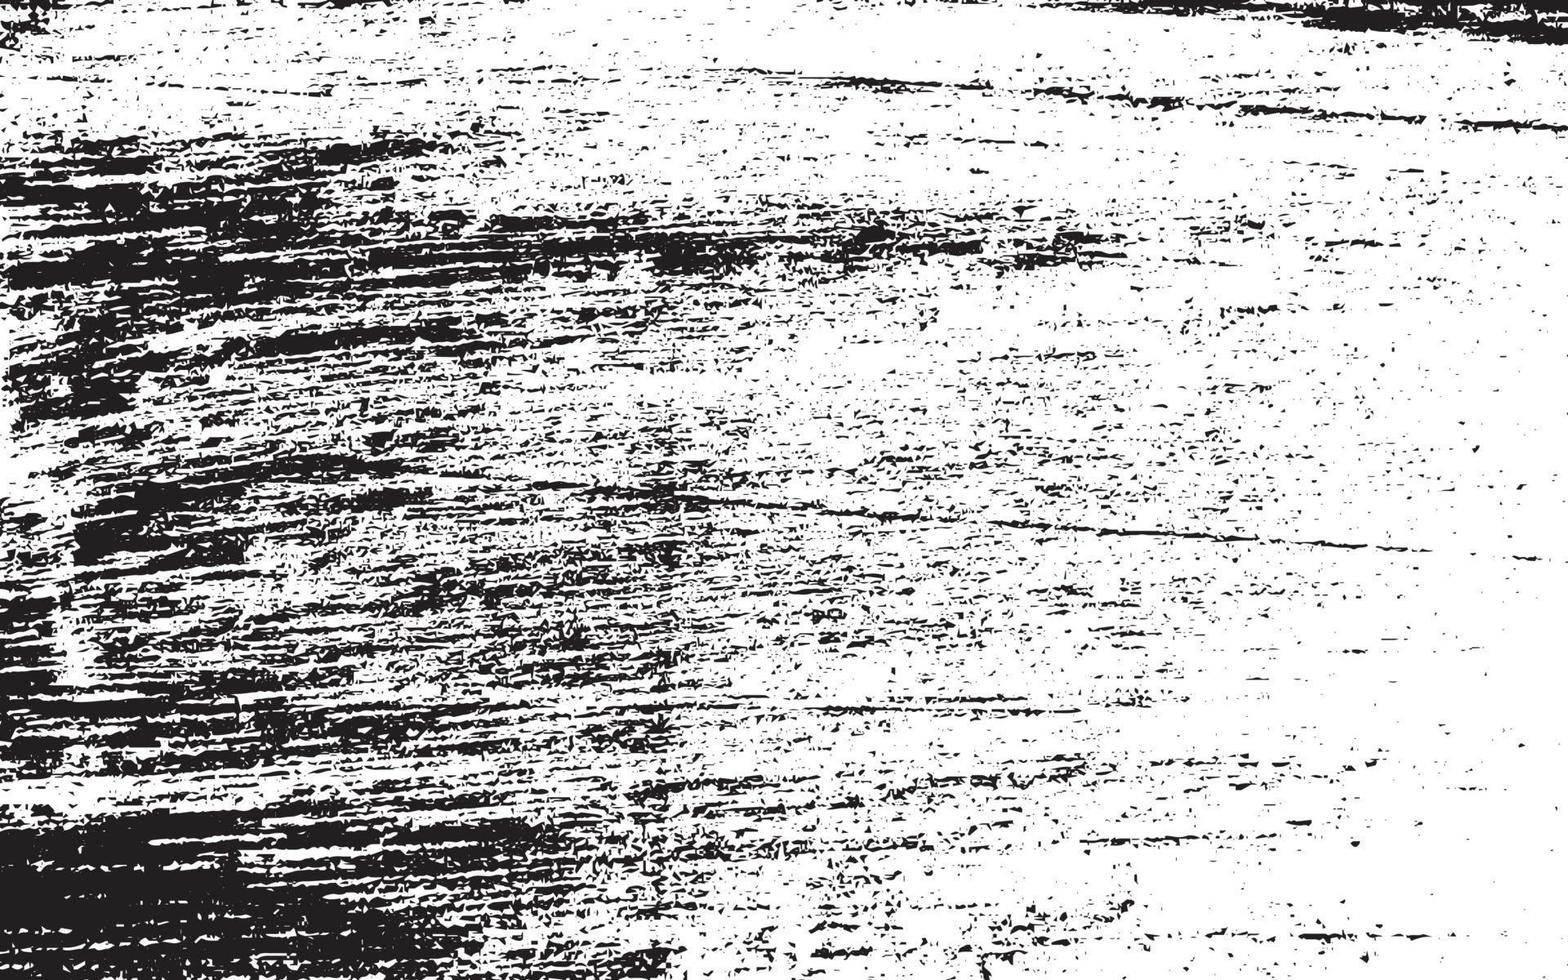 grunge textur effekt. distressed overlay grov texturerad. abstrakt vintage monokrom. svart isolerad på vit bakgrund. grafiskt designelement halvtonsstilkoncept för banner, flygblad, affisch etc vektor